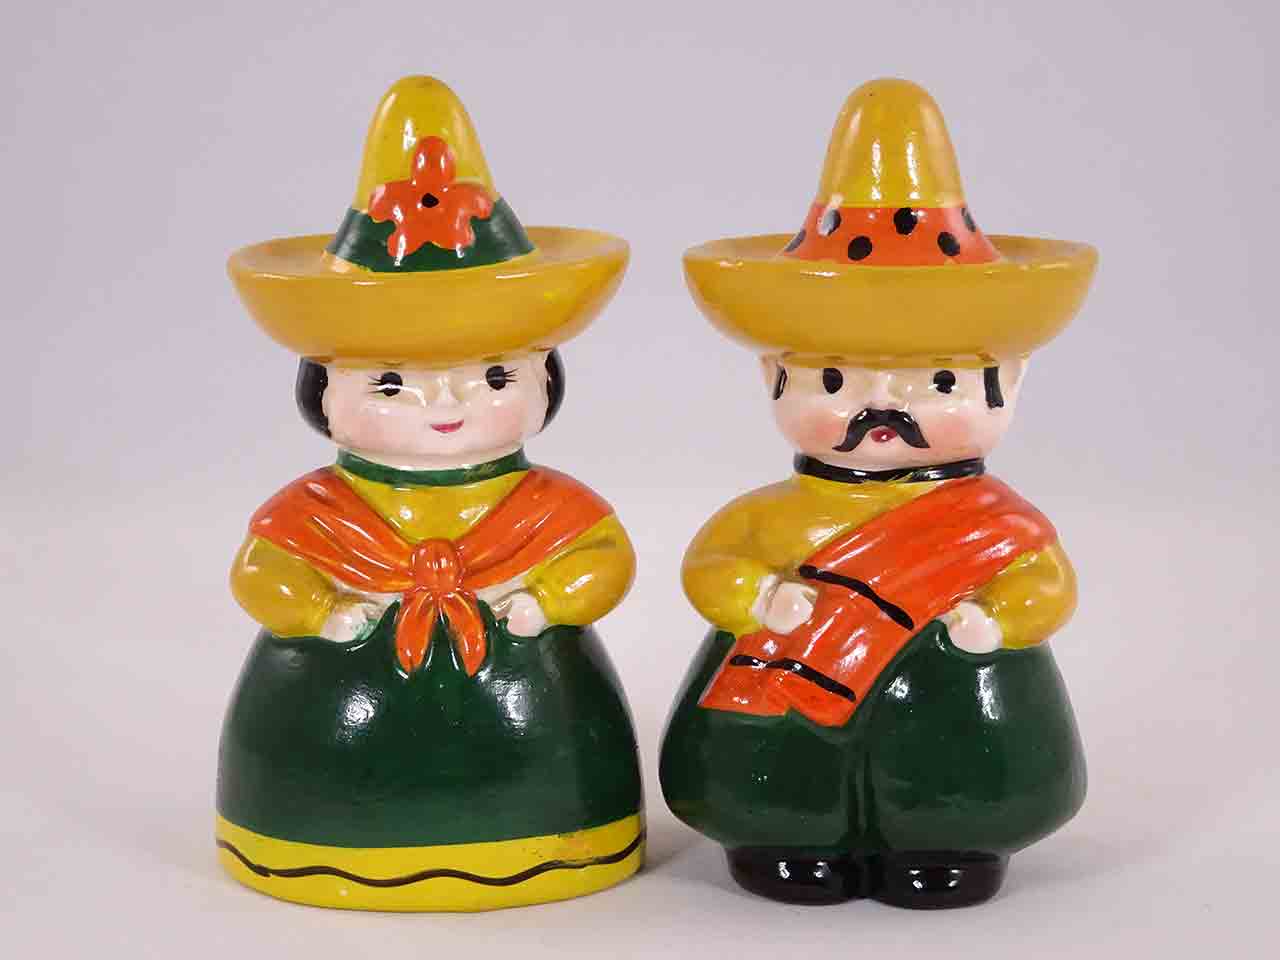 Josef Originals Nationalities salt and pepper shaker series - Mexico